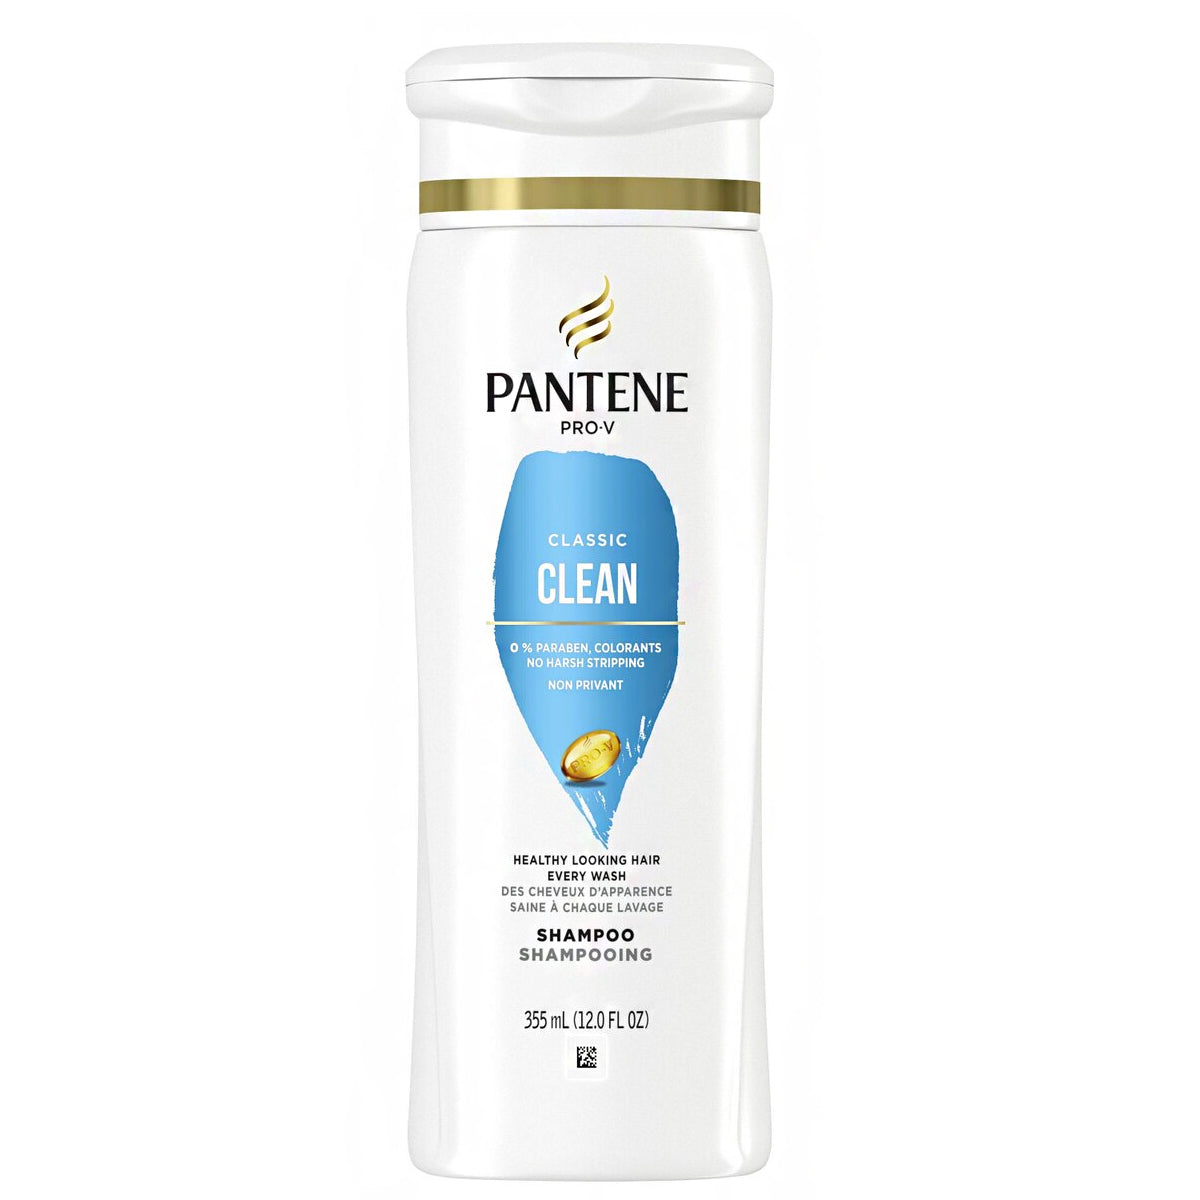 Pantene Pro-V Classic Clean Shampoo 12oz